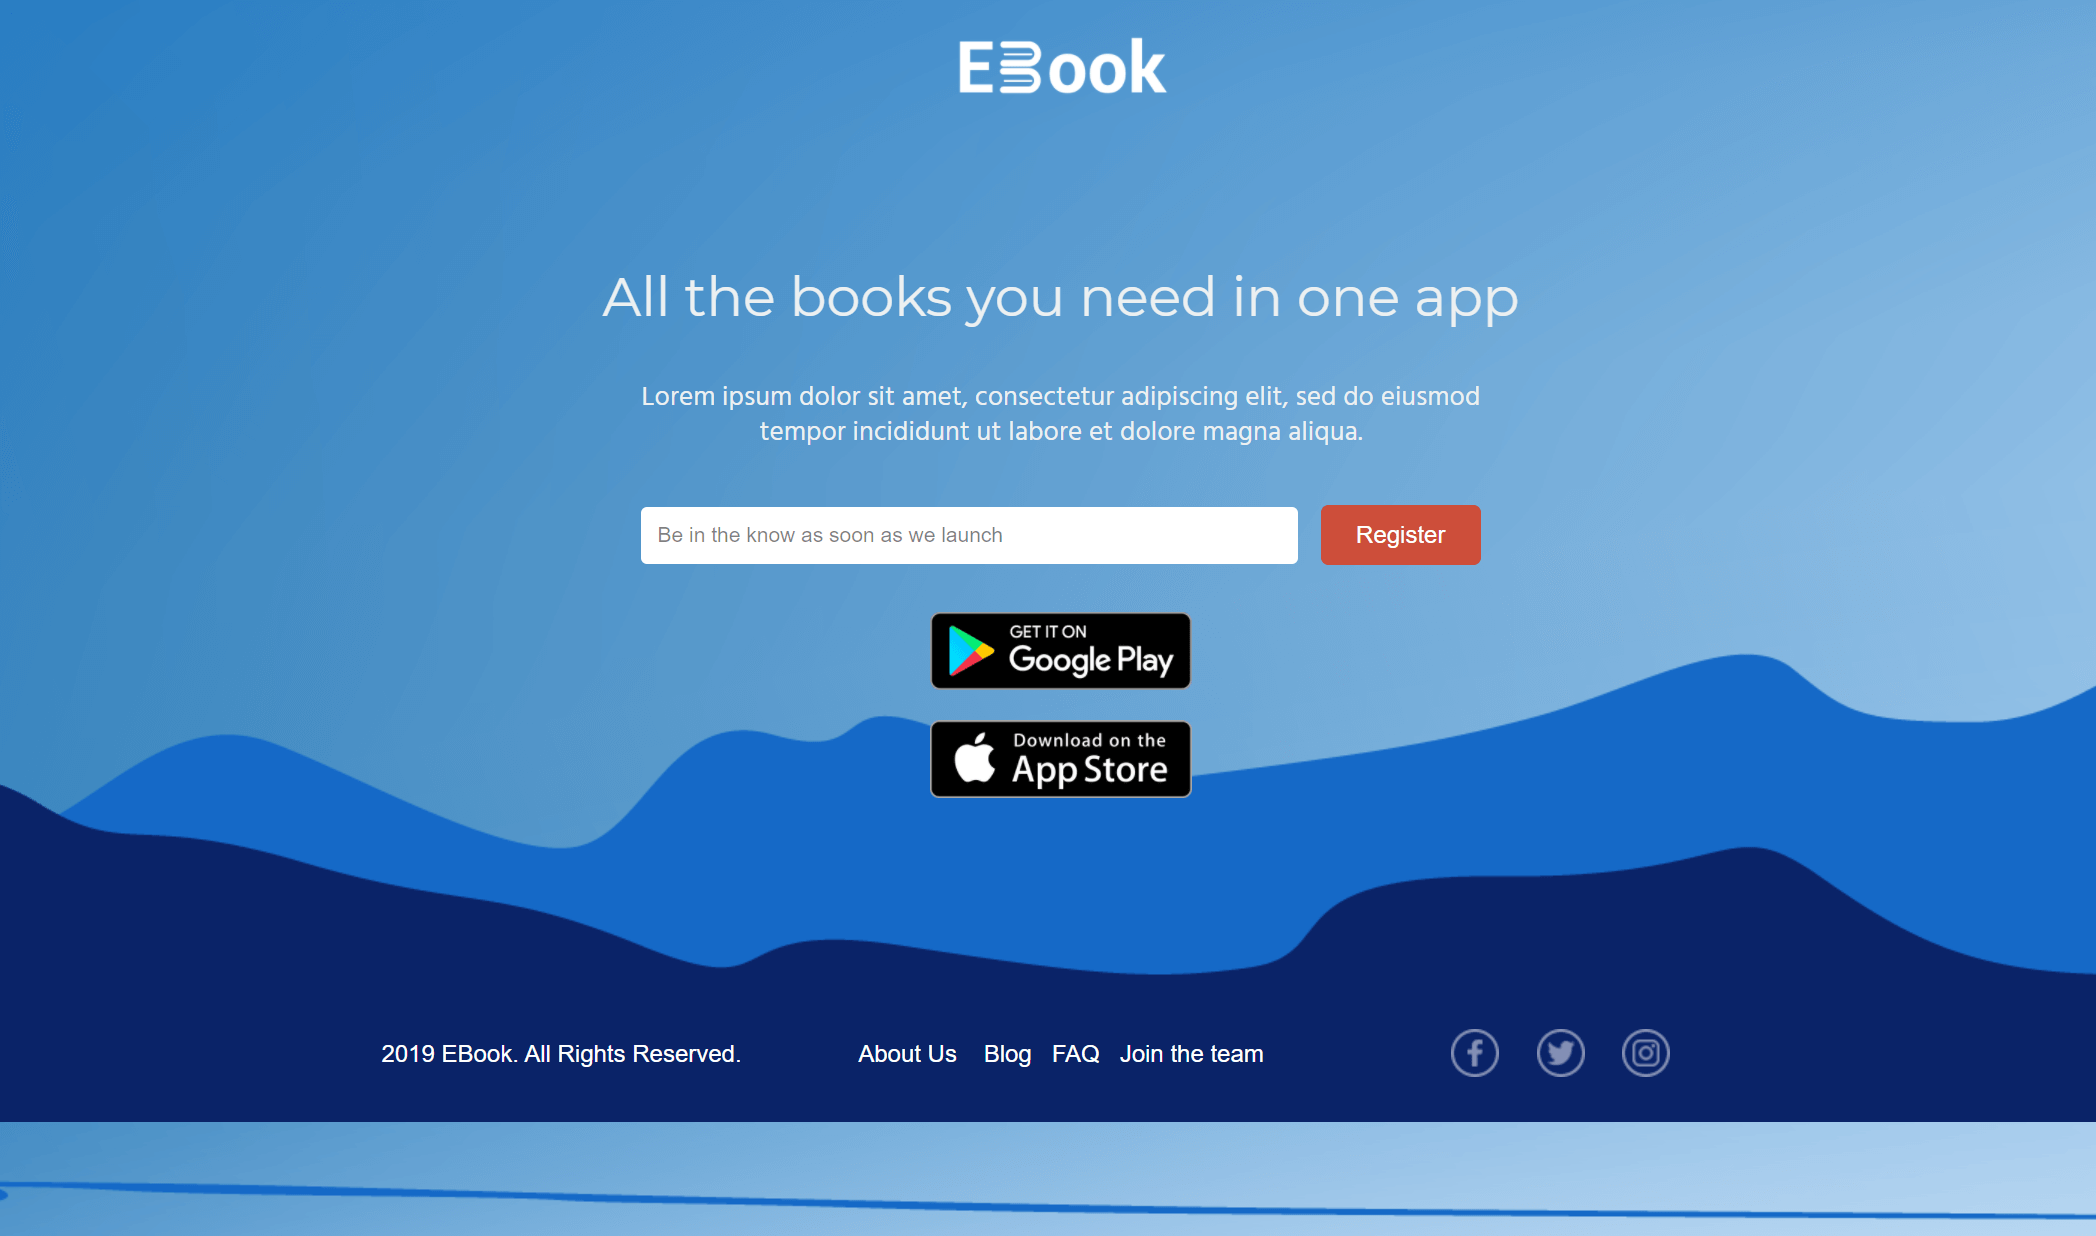 ebook promo landing page templates